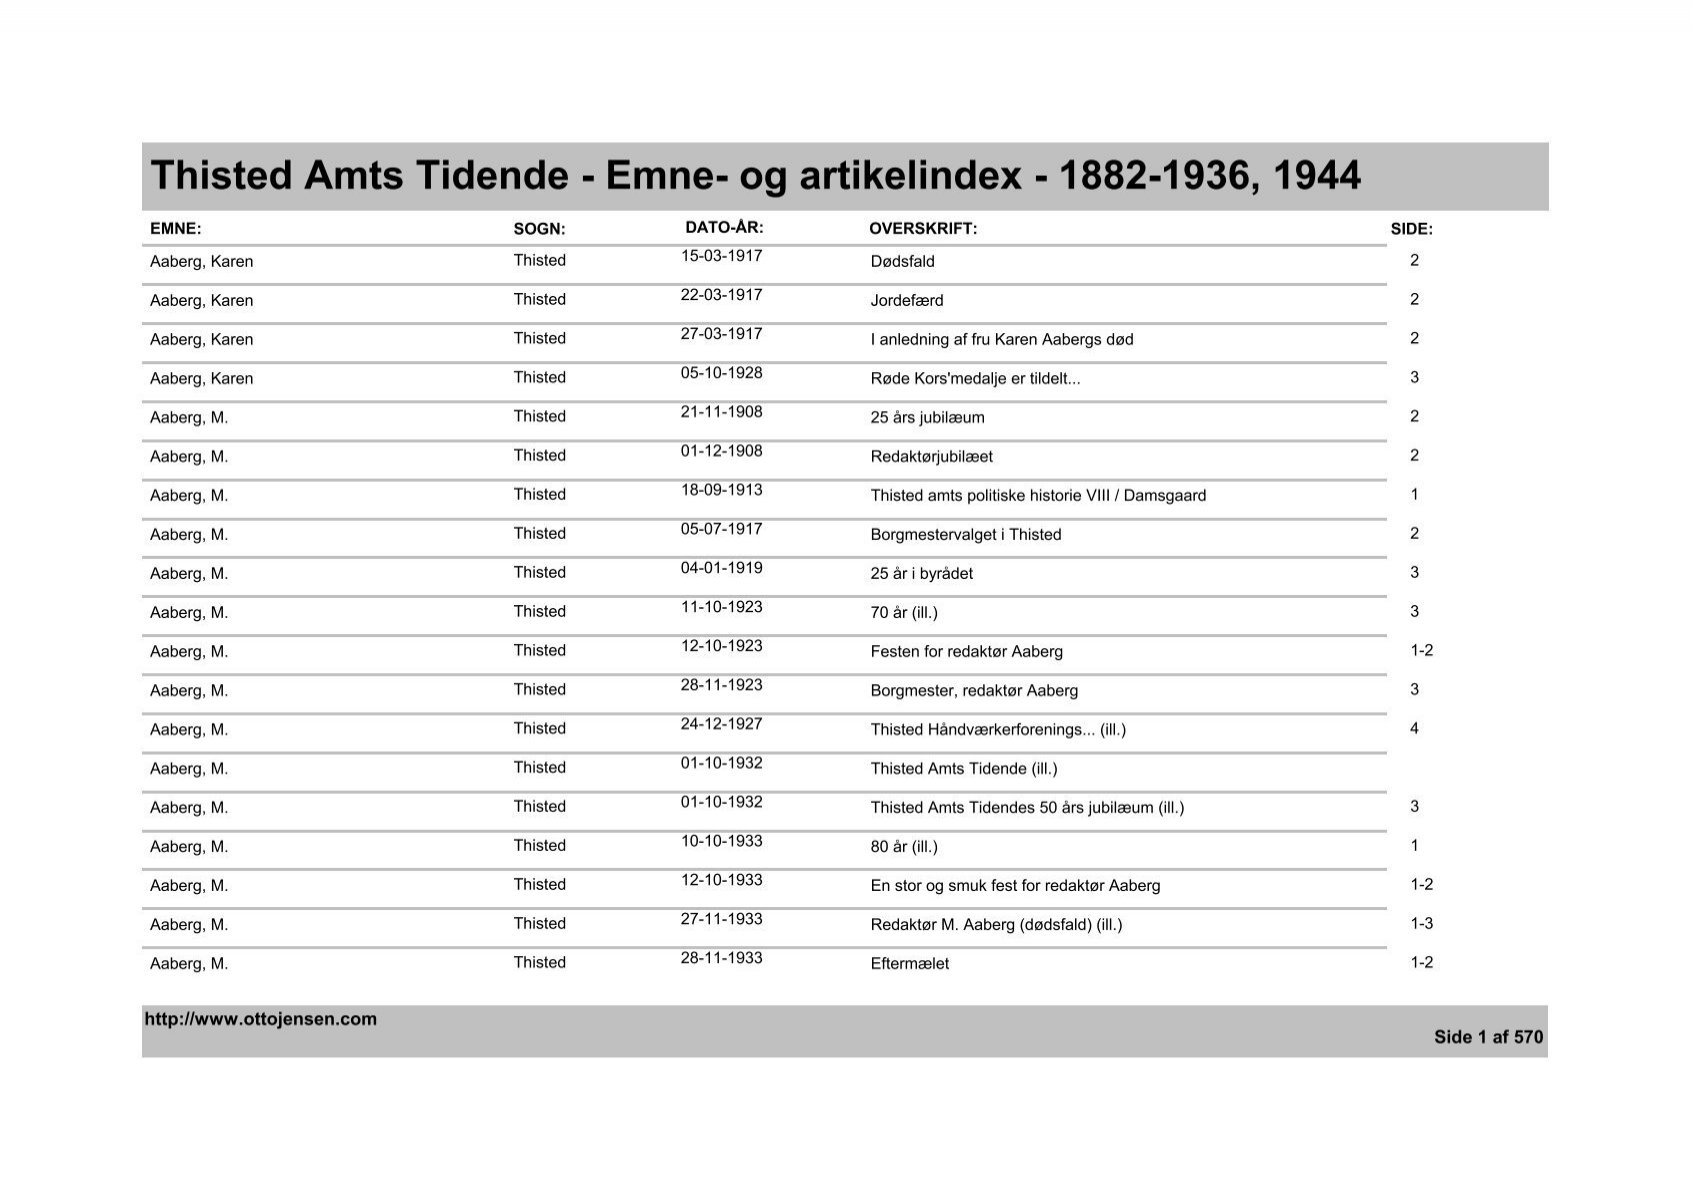 Thisted Amts Tidende - Emne- artikelindex - 1882-1936, 1944